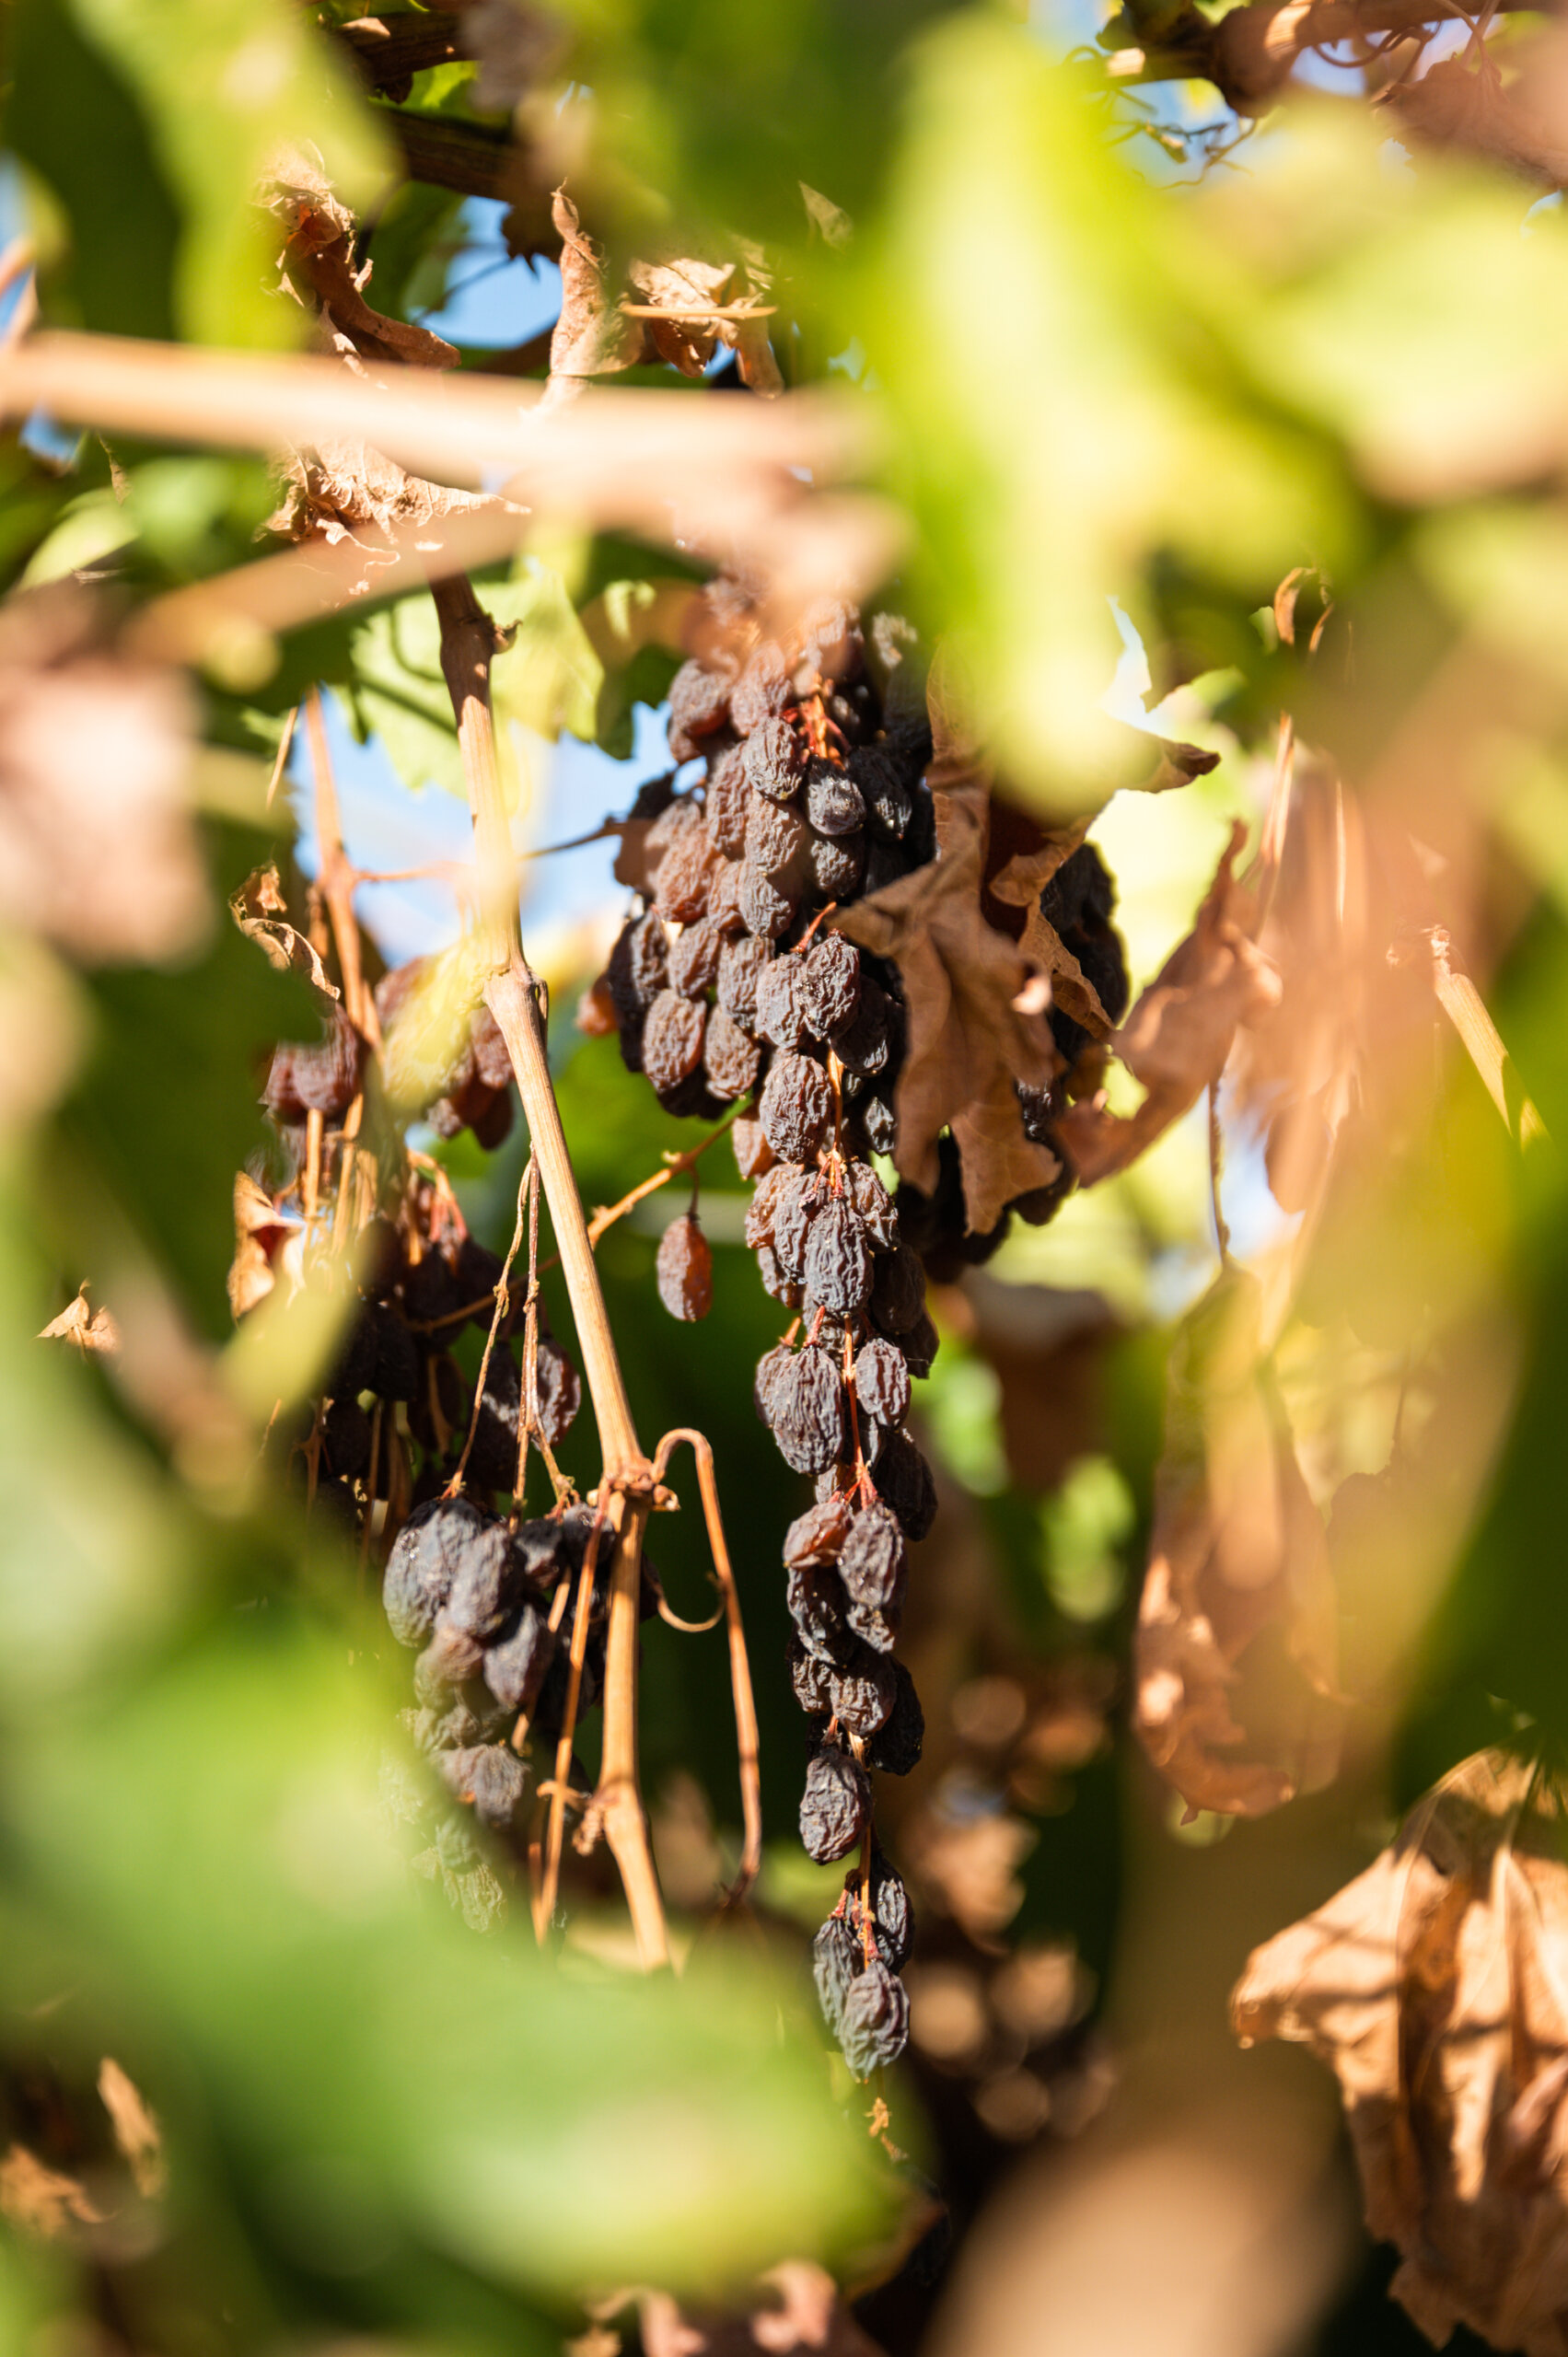 Vine-dried Selma Pete grapes